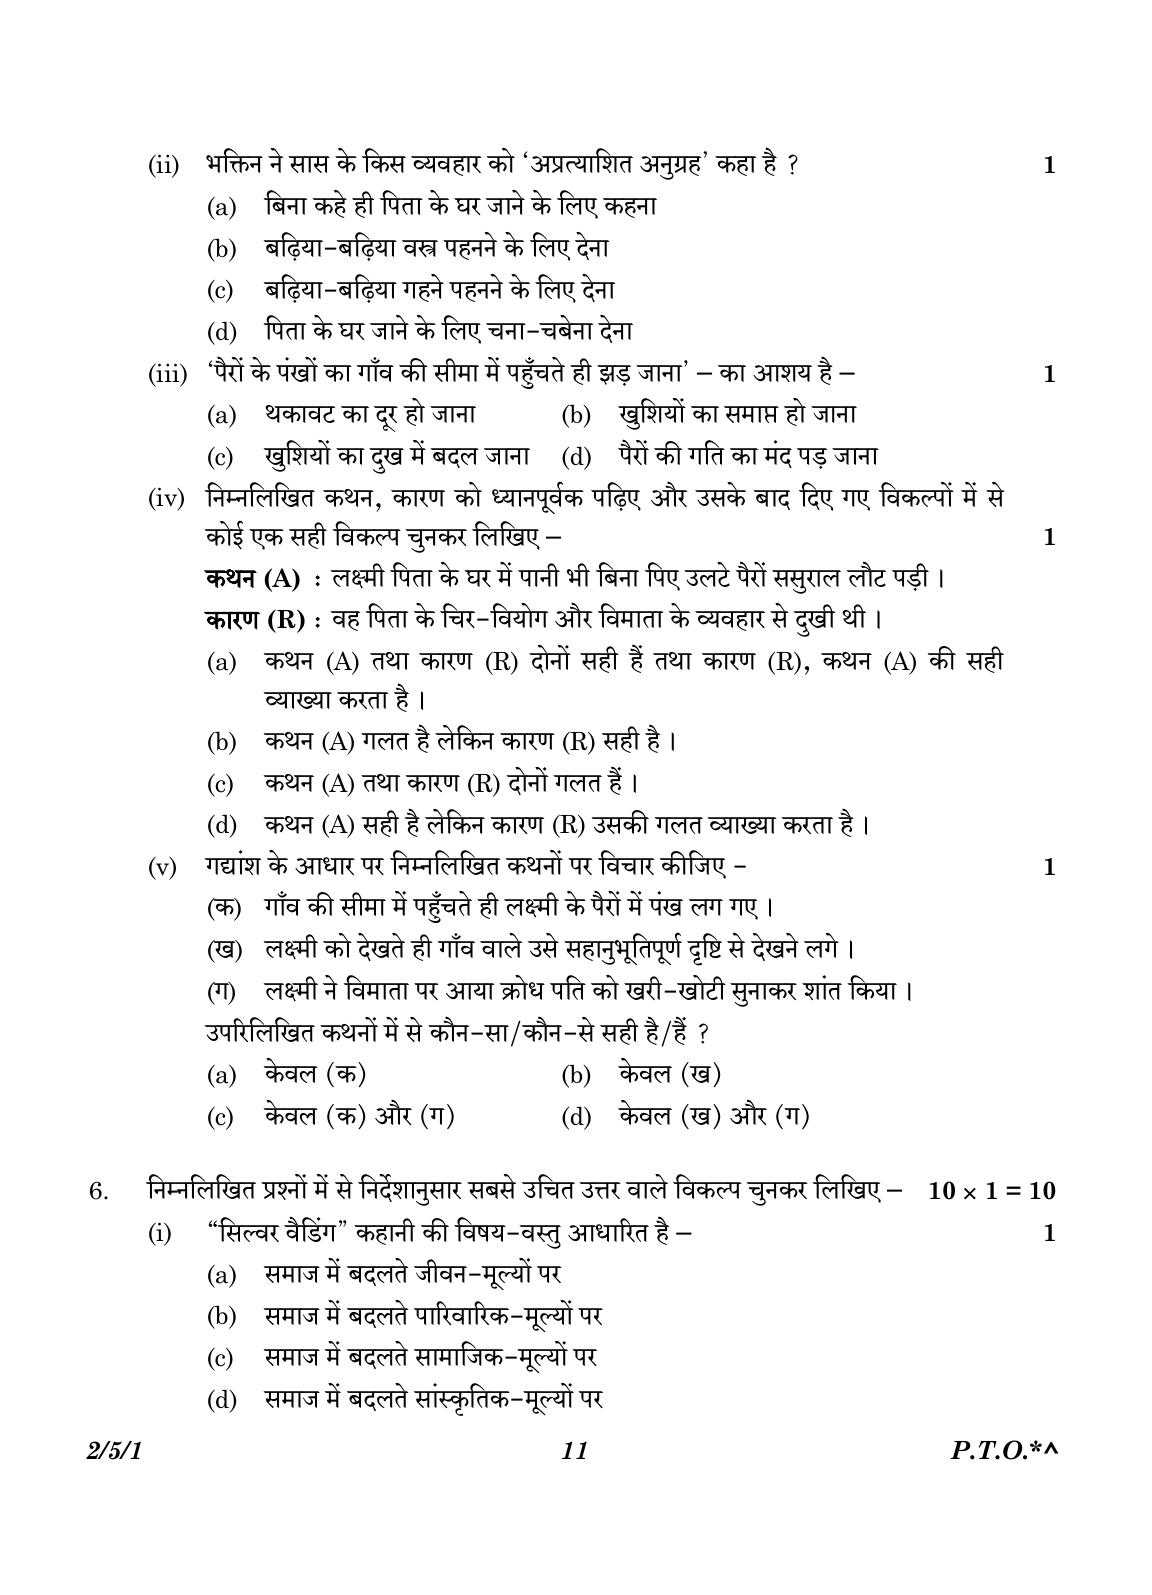 CBSE Class 12 2-5-1 Hindi Core version 2023 Question Paper - Page 11